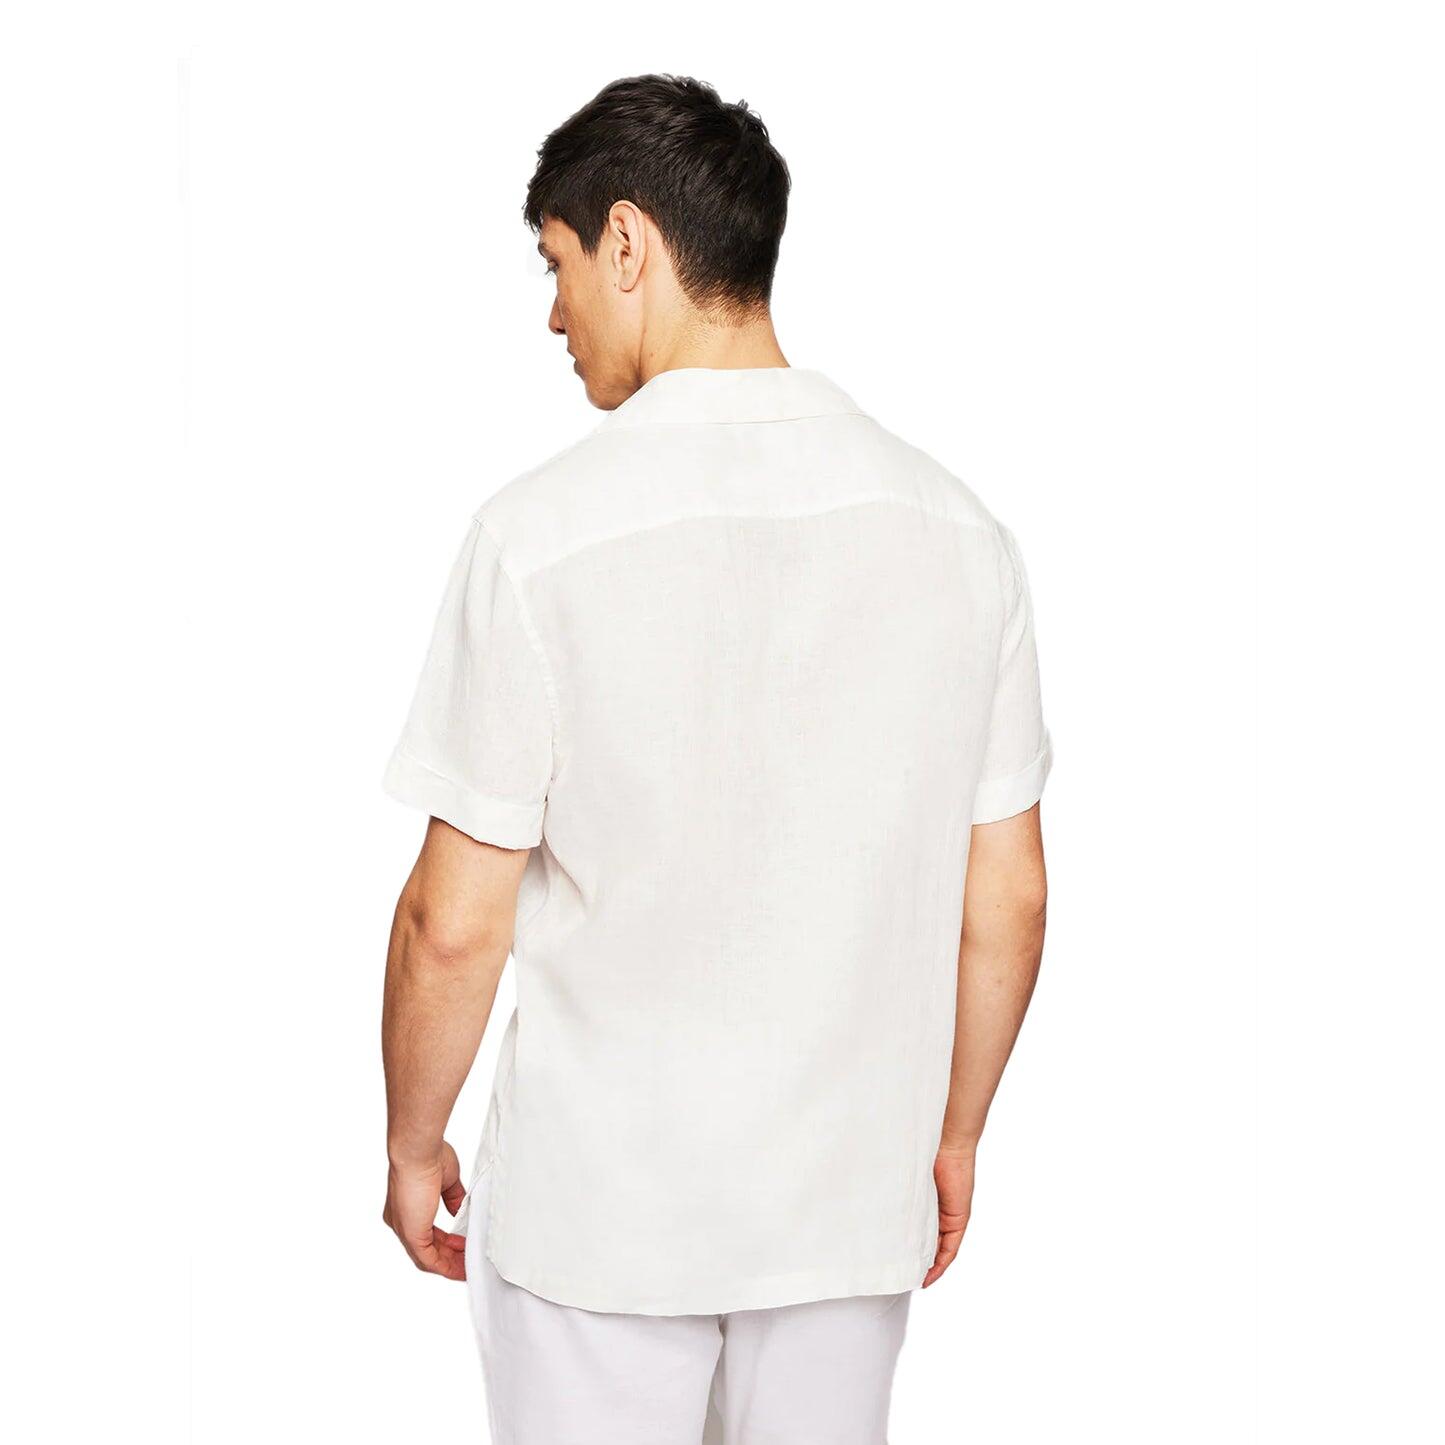 Mens White Short Sleeve Shirt